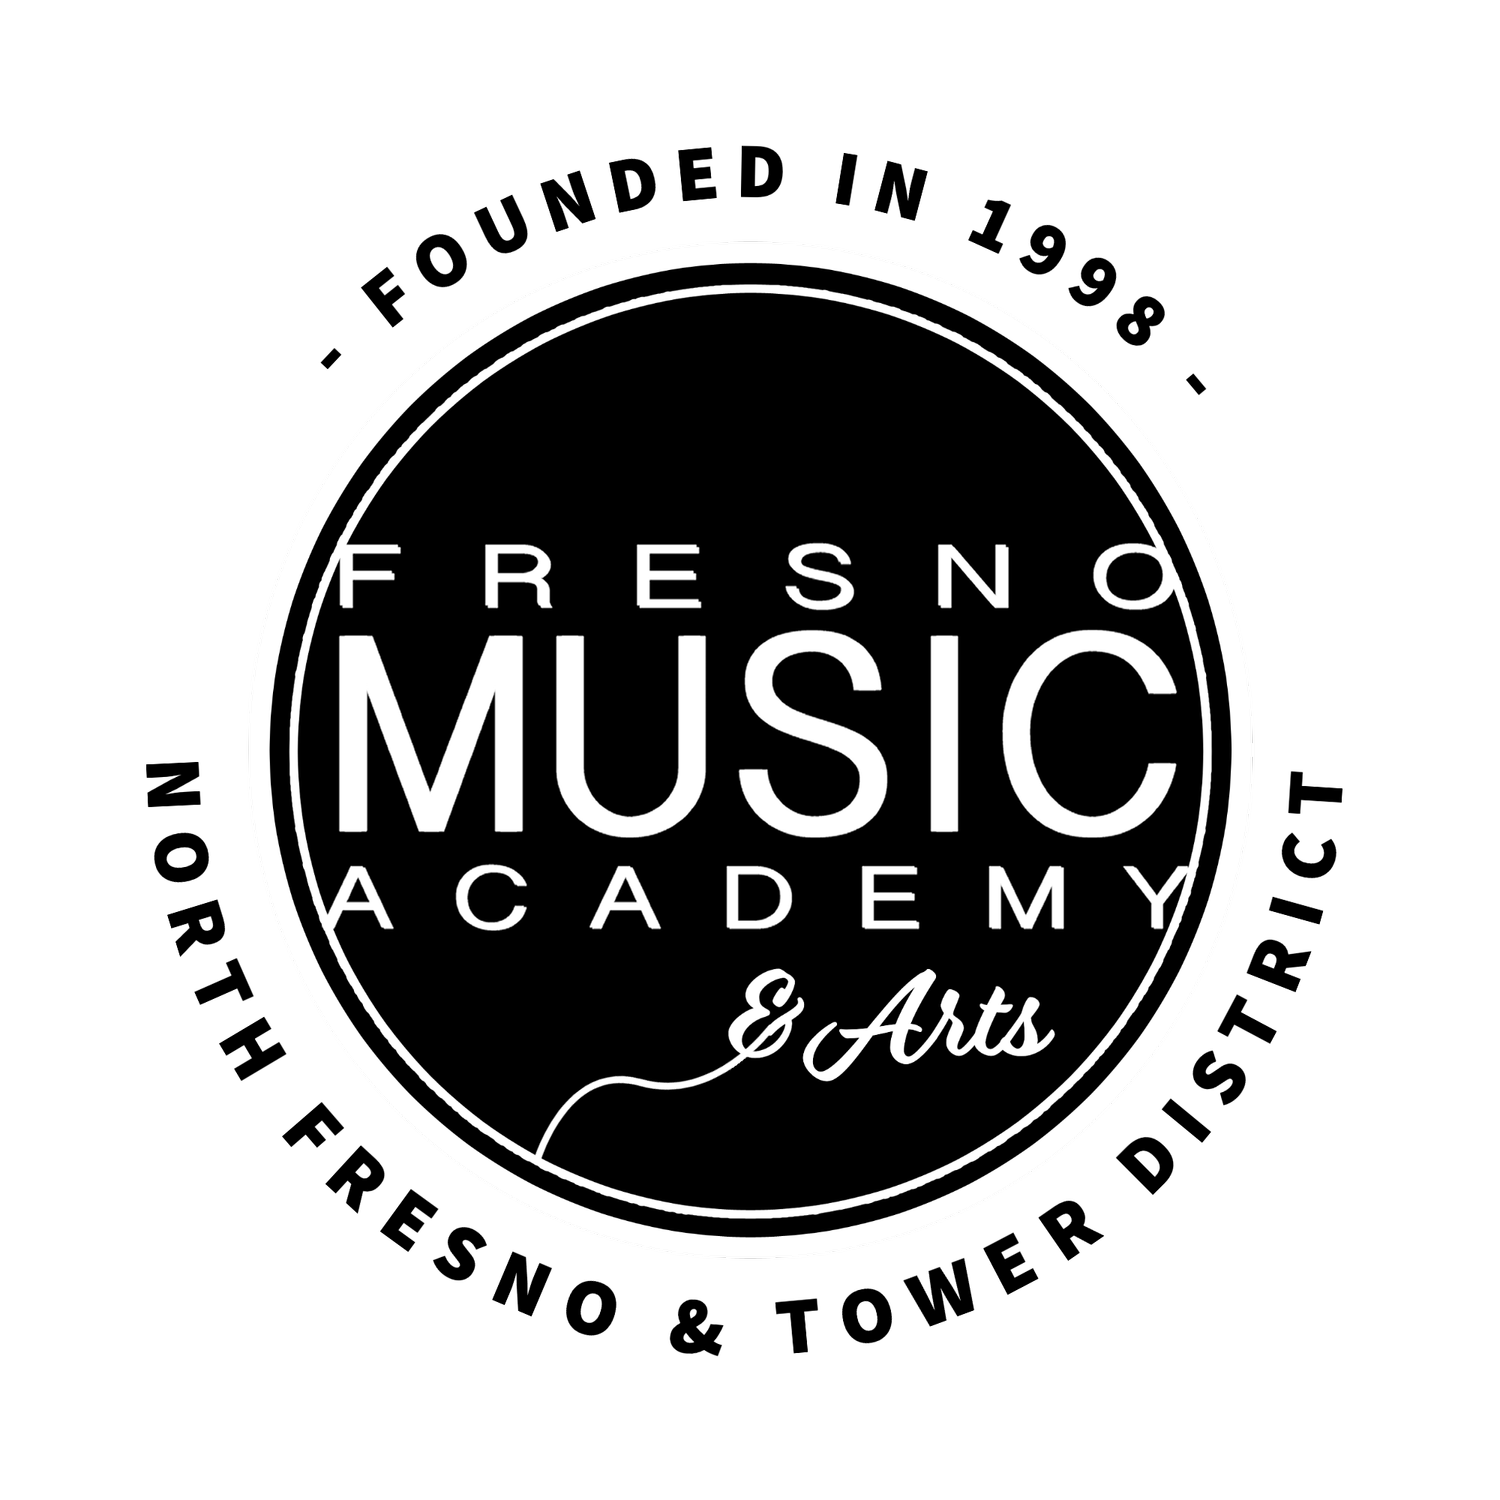 Fresno Music Academy & Arts 